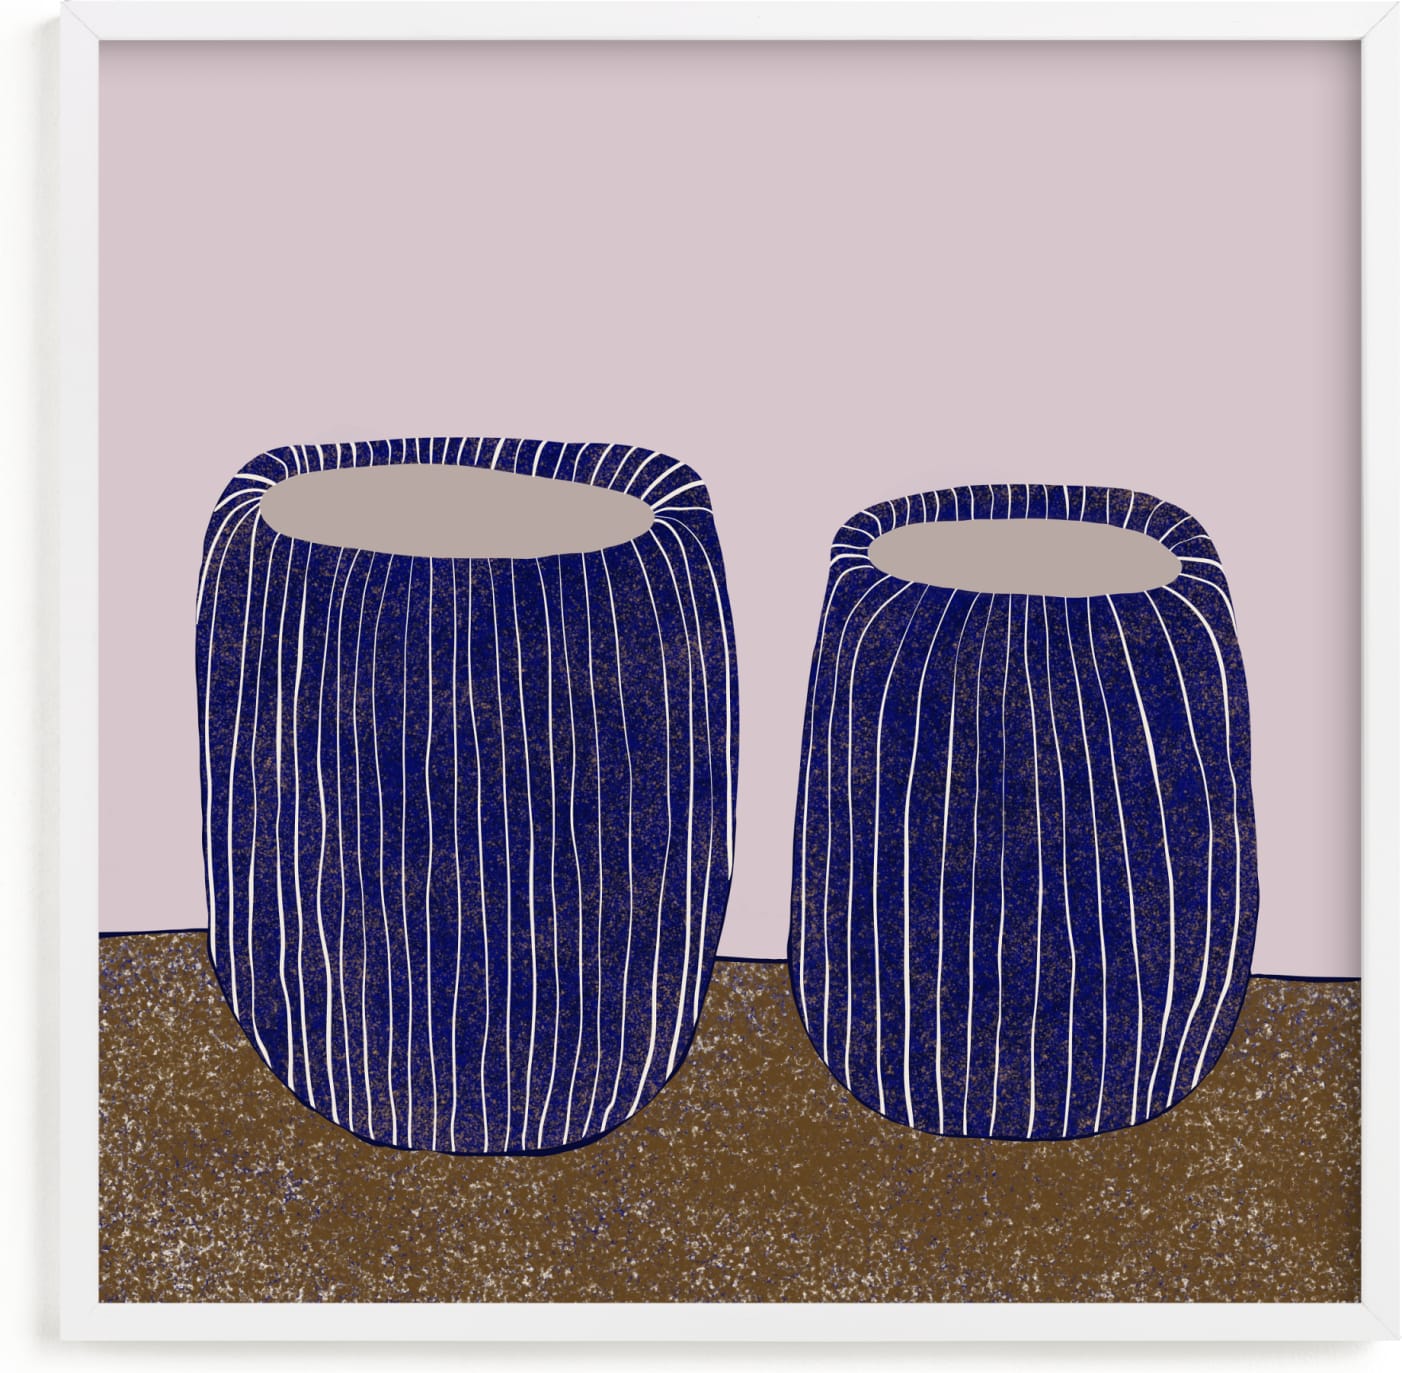 This is a blue art by Danushka Abeygoda called Benevolent Ceramics I.